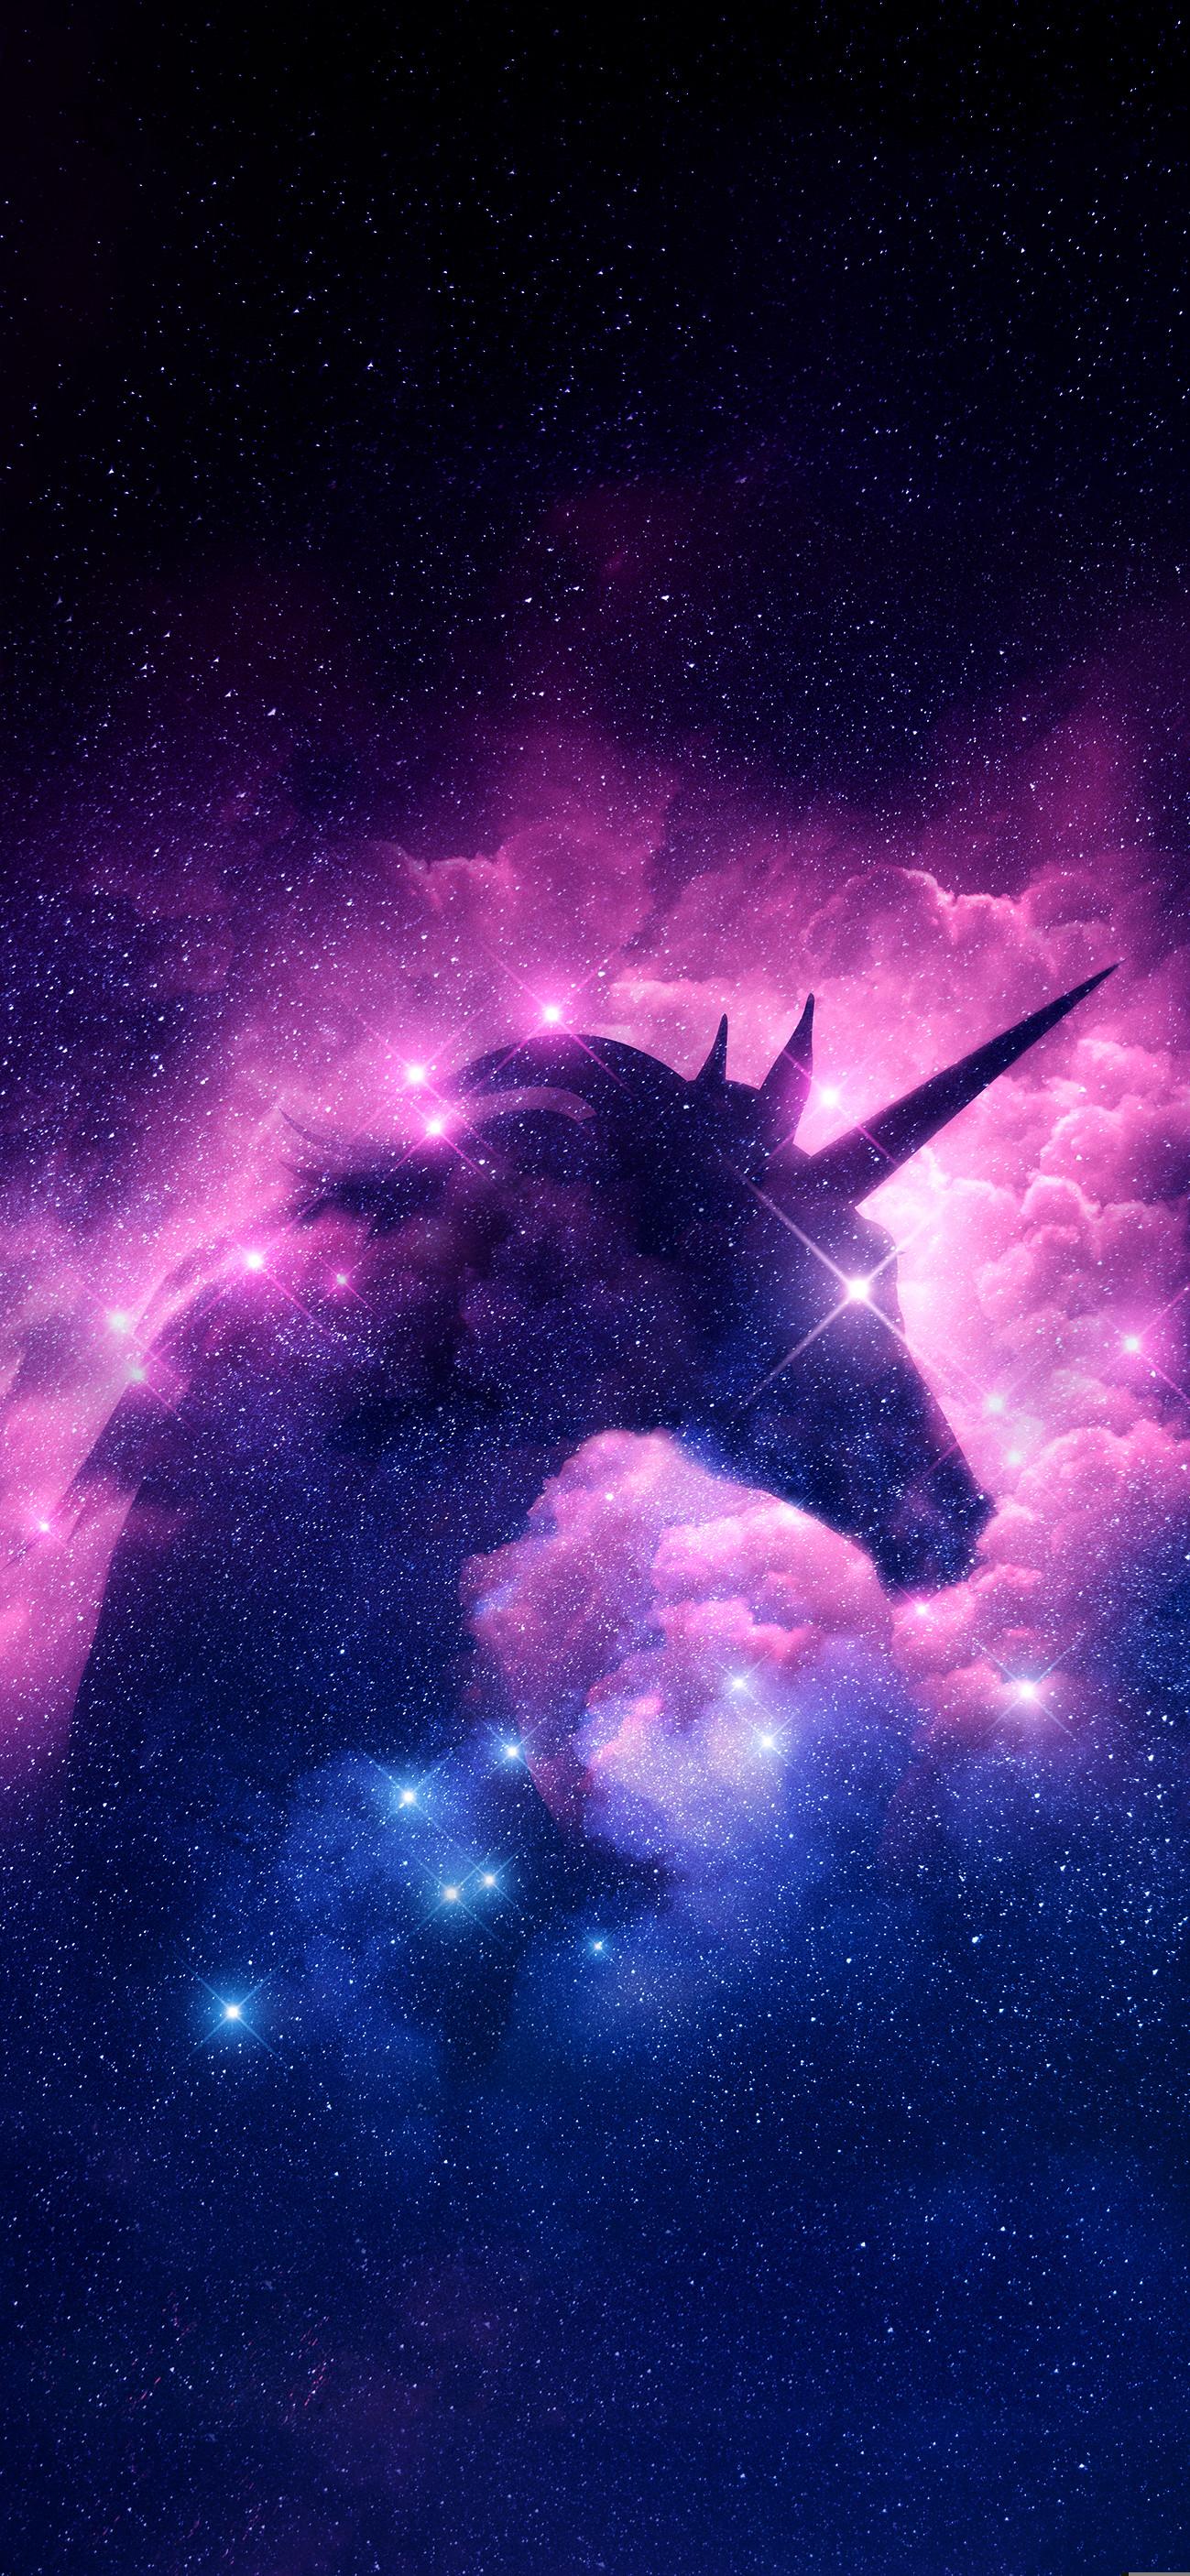 Unicorn iPhone Wallpaper Image